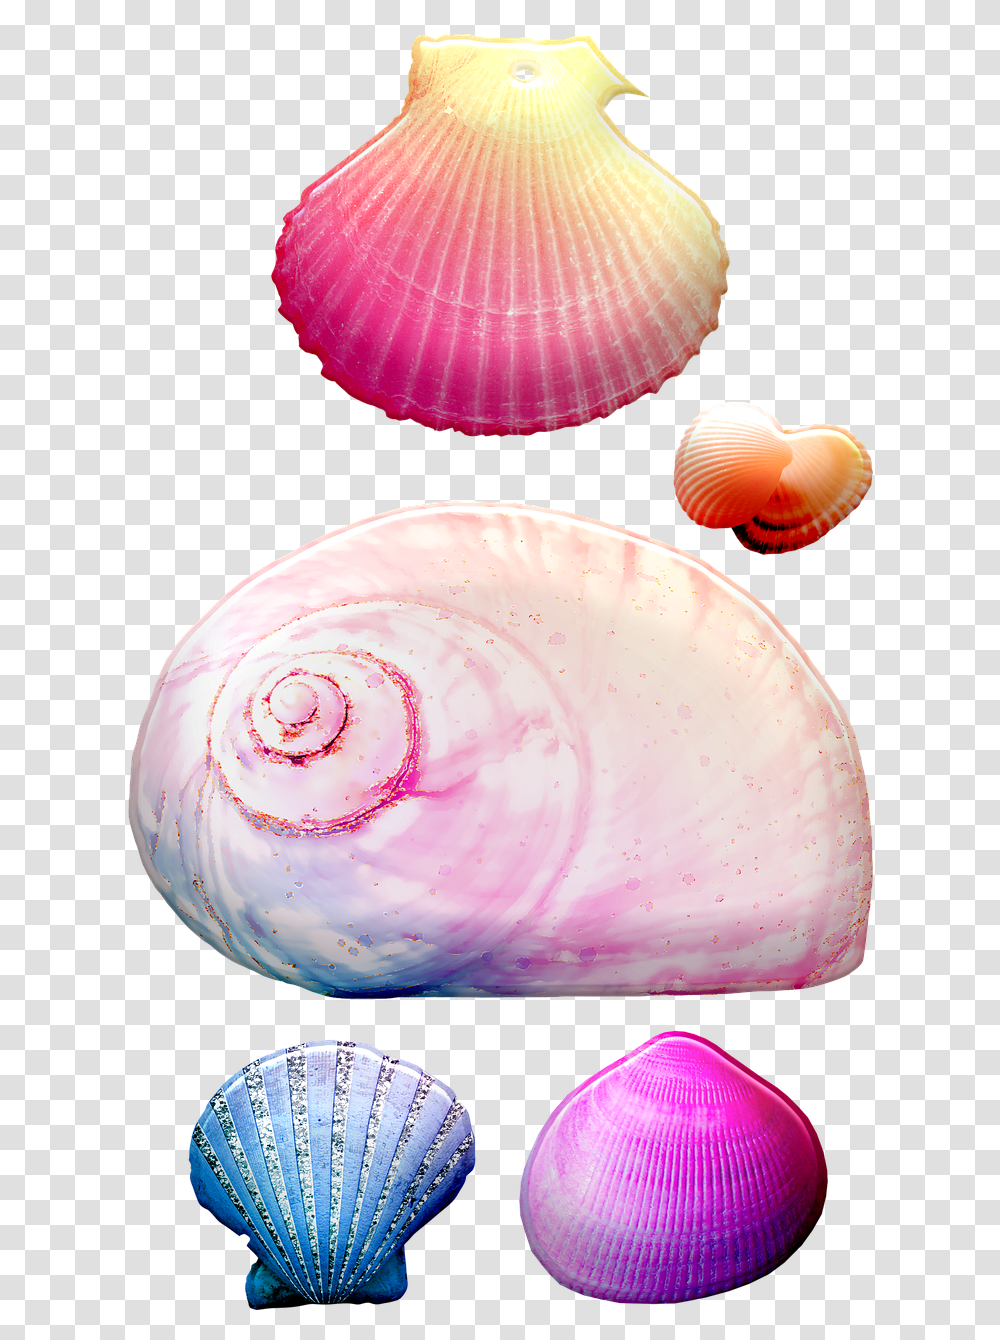 Seashells Shells Conch Free Image On Pixabay, Sea Life, Animal, Invertebrate, Clam Transparent Png